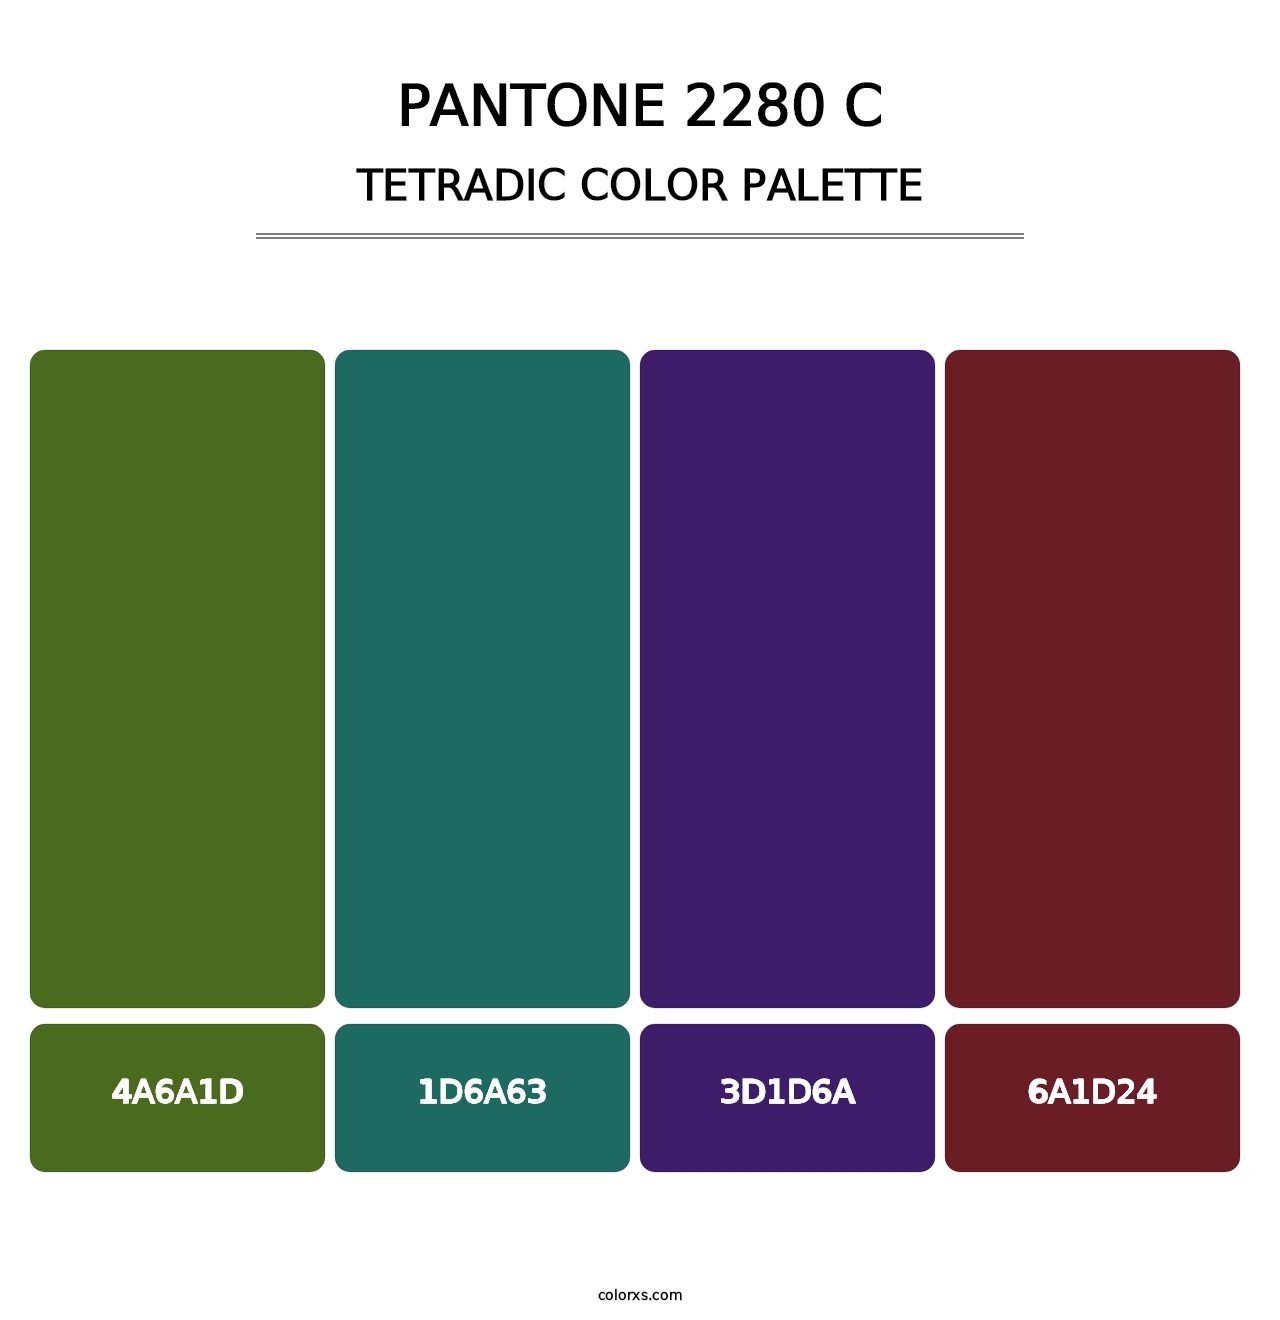 PANTONE 2280 C - Tetradic Color Palette